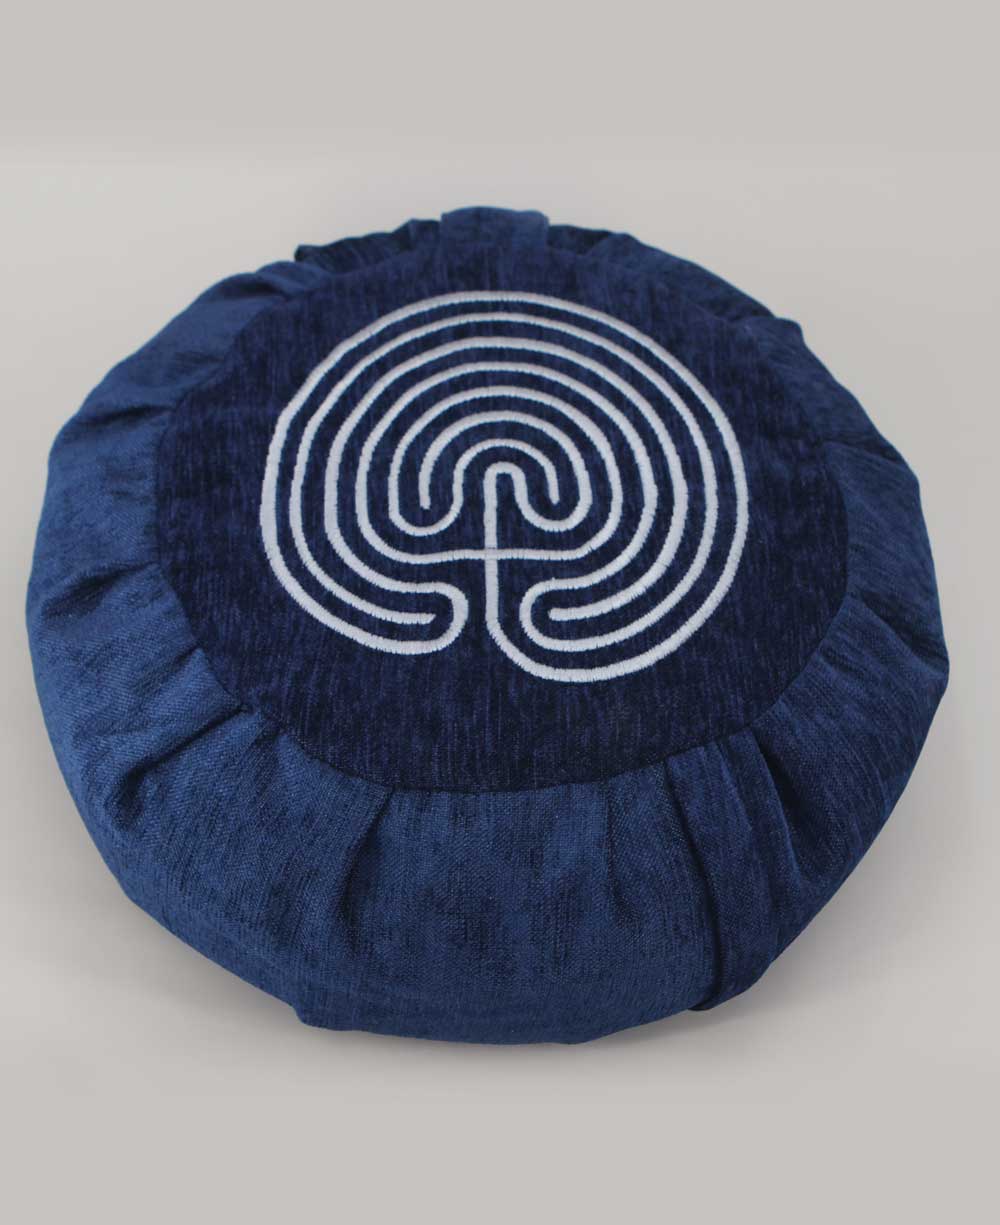 Seven Circles Labyrinth Design Zafu Meditation Cushion - Massage Cushions